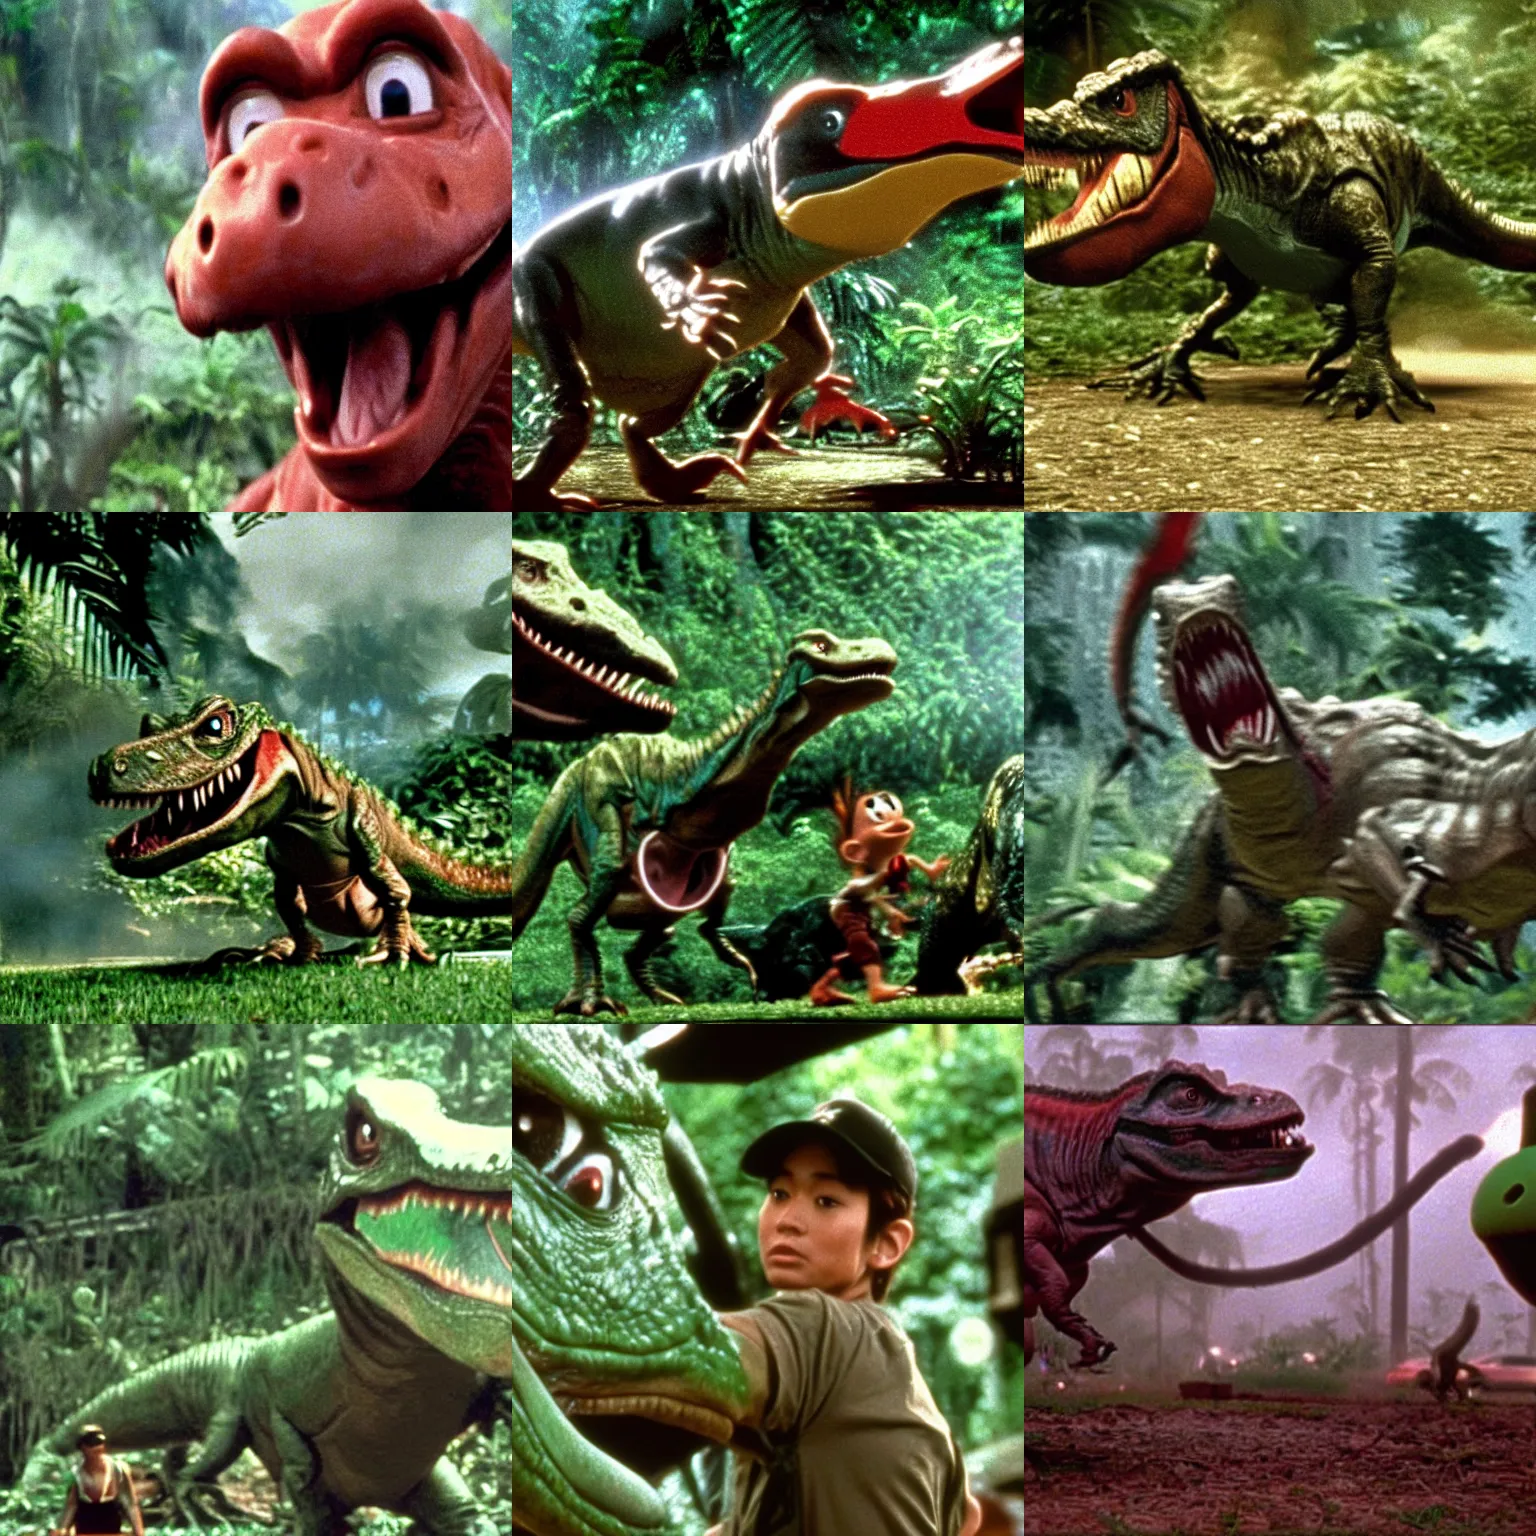 Prompt: Cinematic still of Yoshi in Jurassic Park (1993)